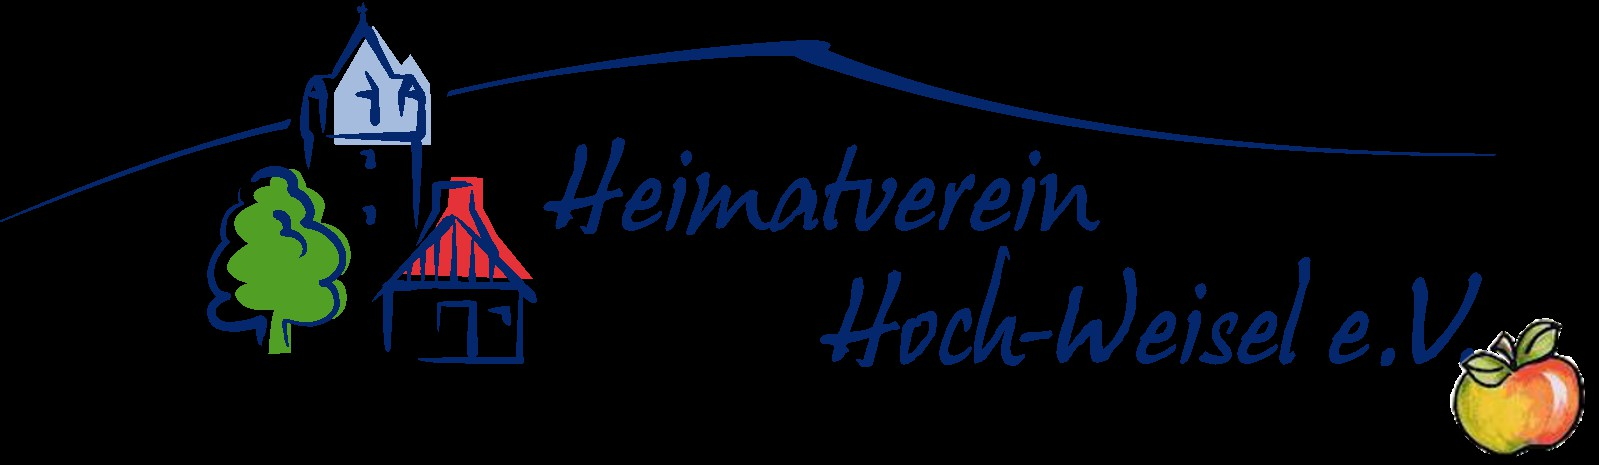 Obstbaumbestellung Heimatverein Hoch-Weisel e.v. Obstbaumbestellung Heimatverein Hoch-Weisel e.v. Seite 1 Name: Annahmeschluss: 20.10.